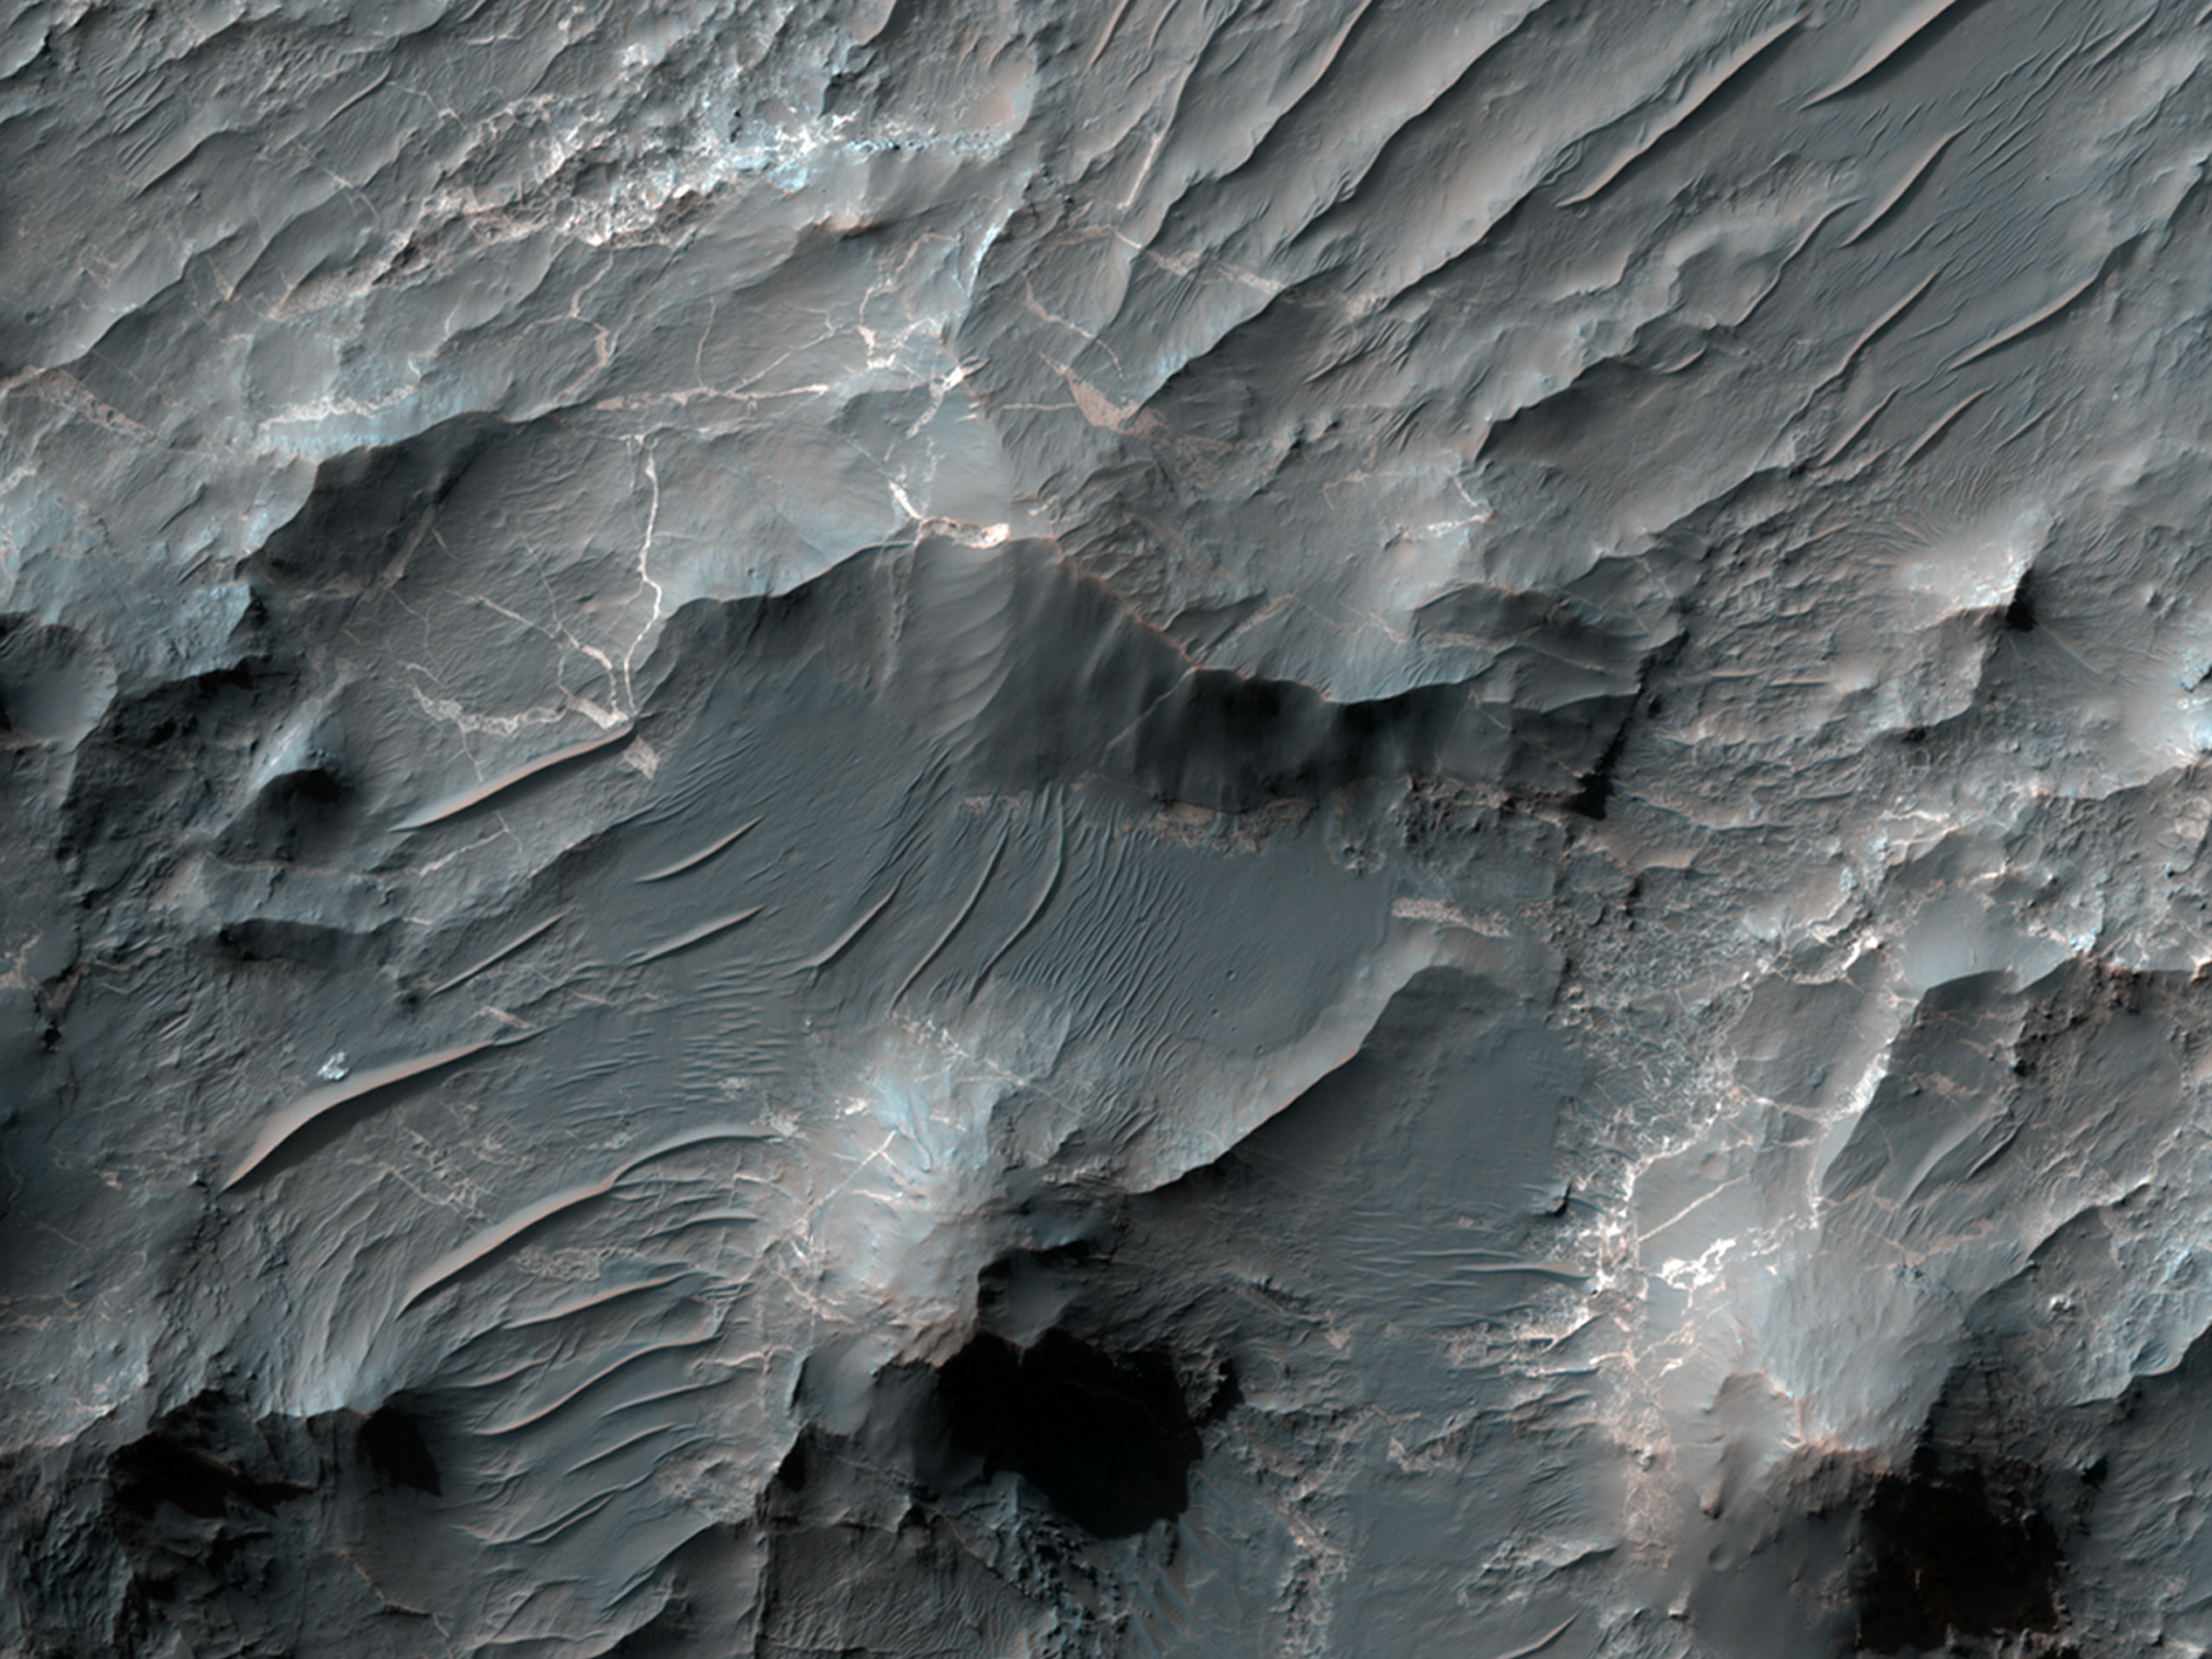 Layers in Uzboi Vallis